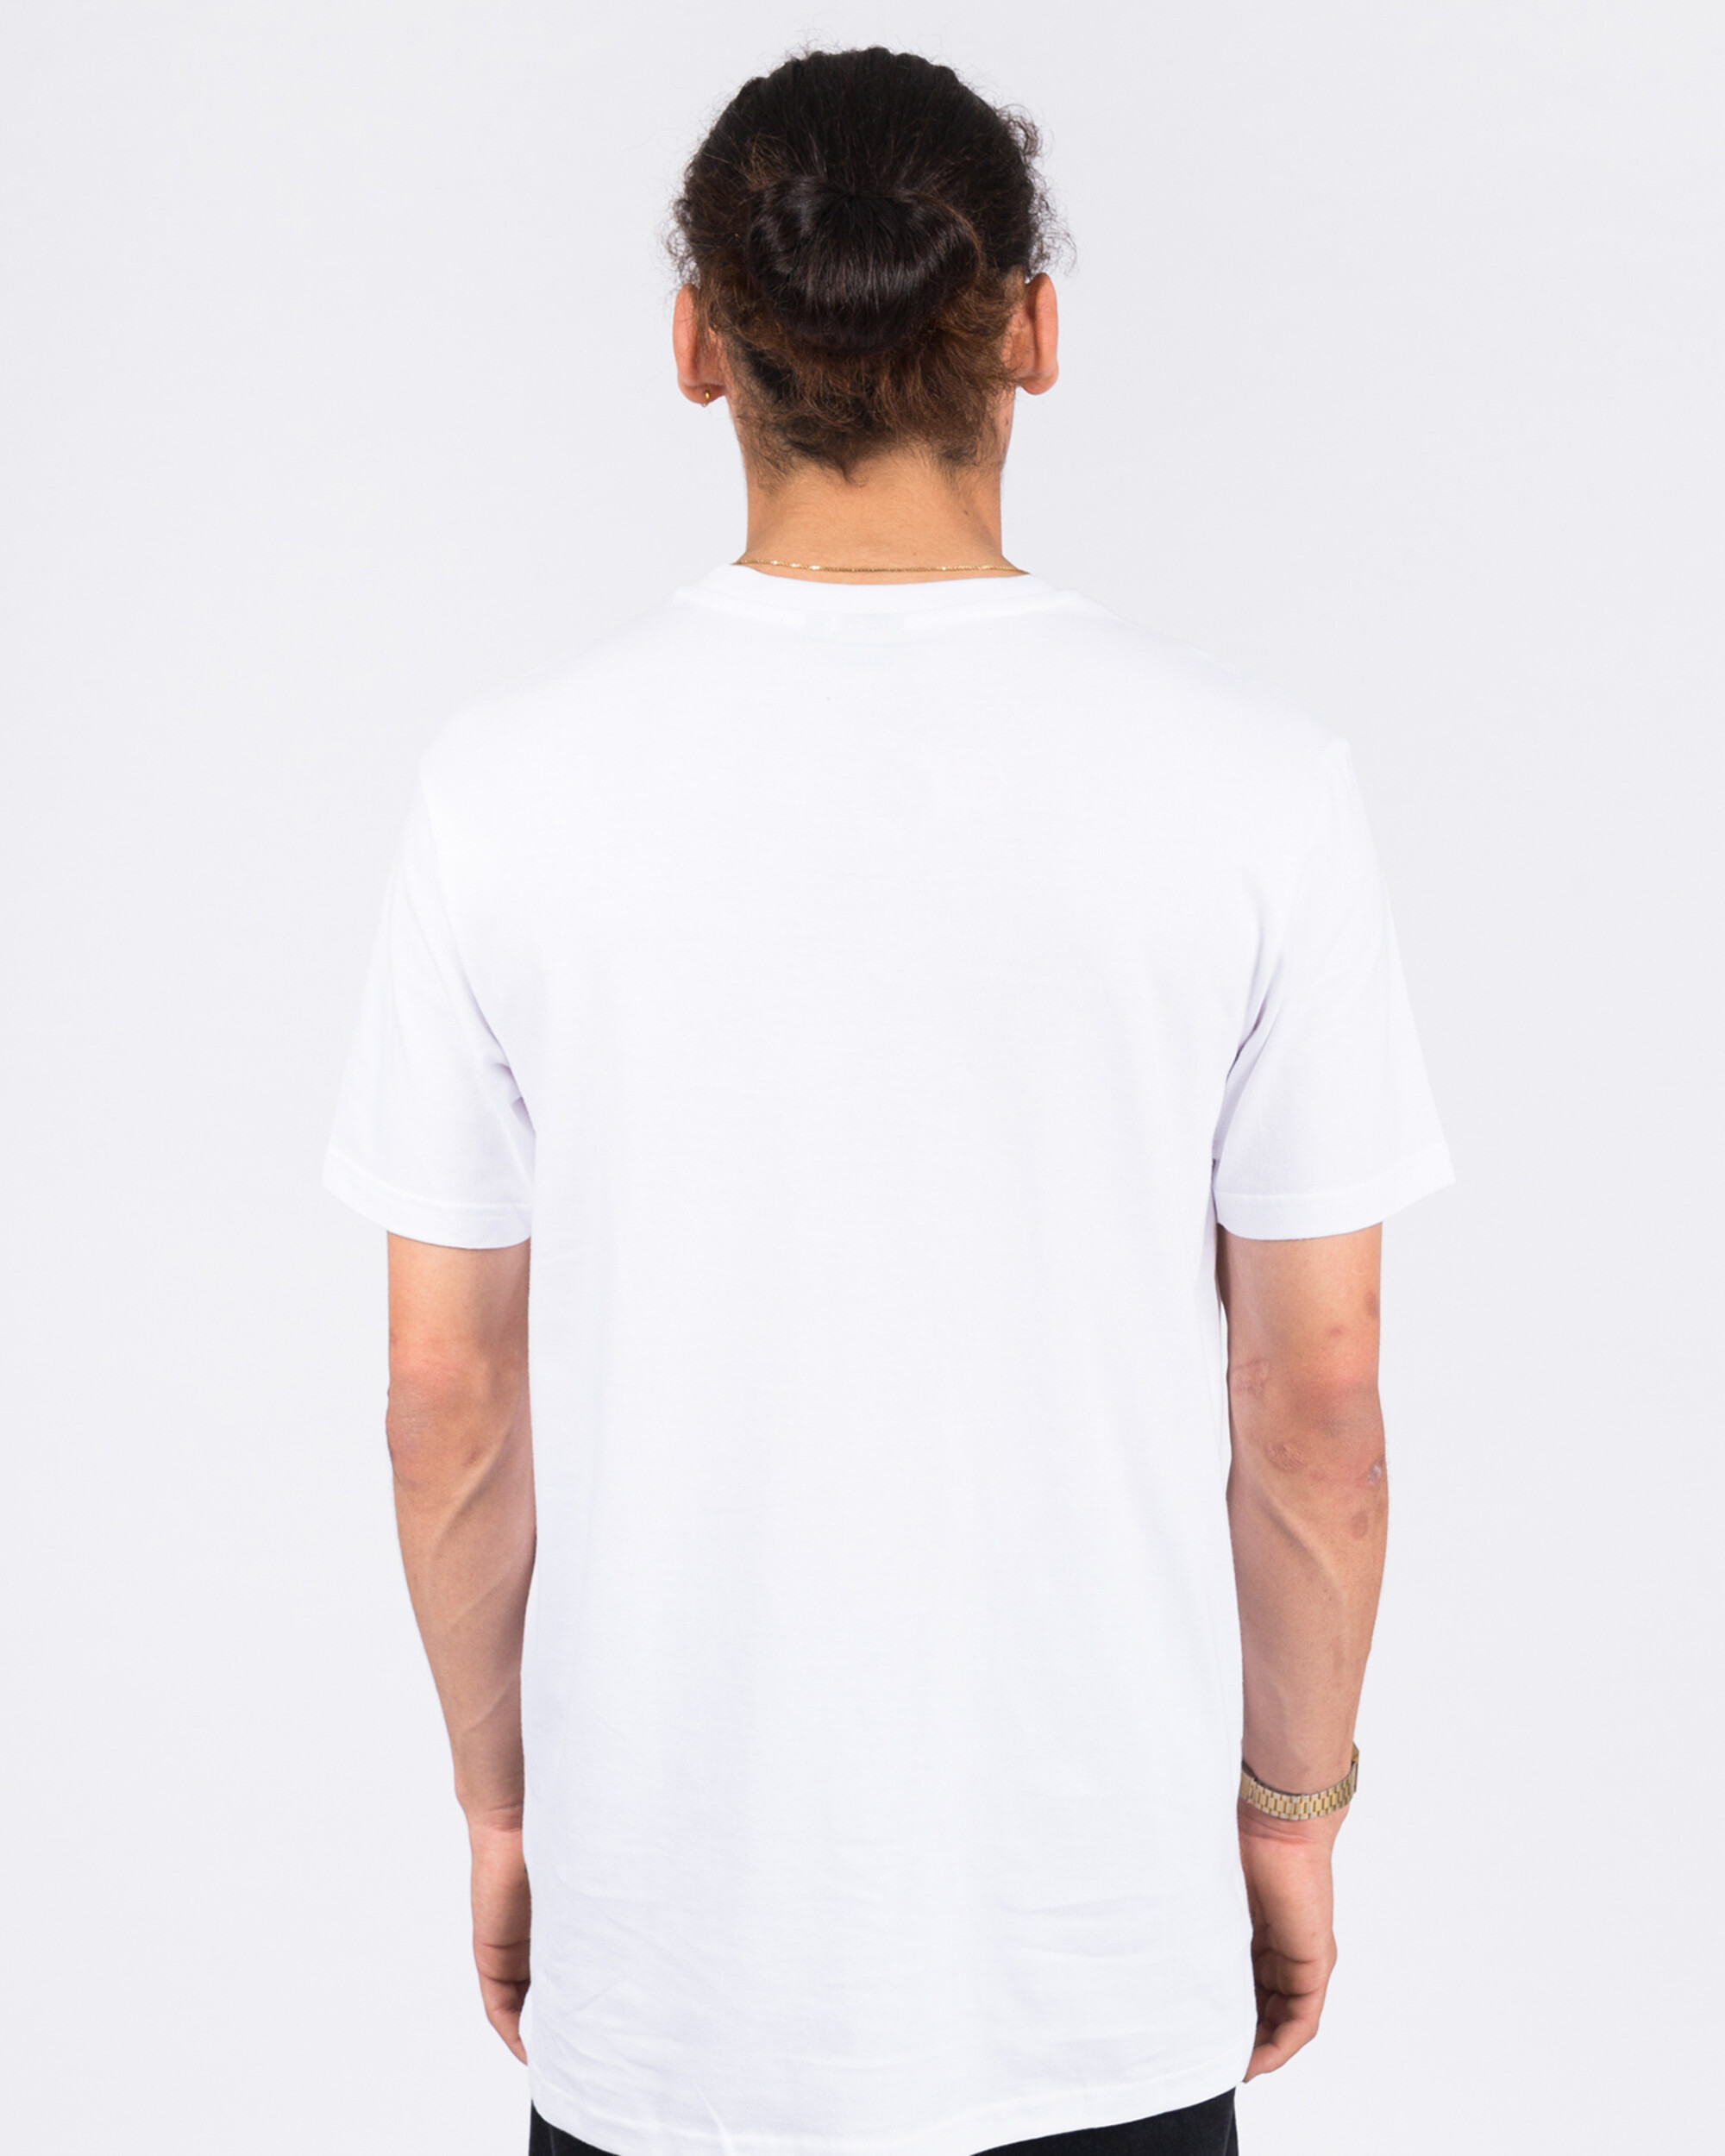 Ben G BKNY T-Shirt White